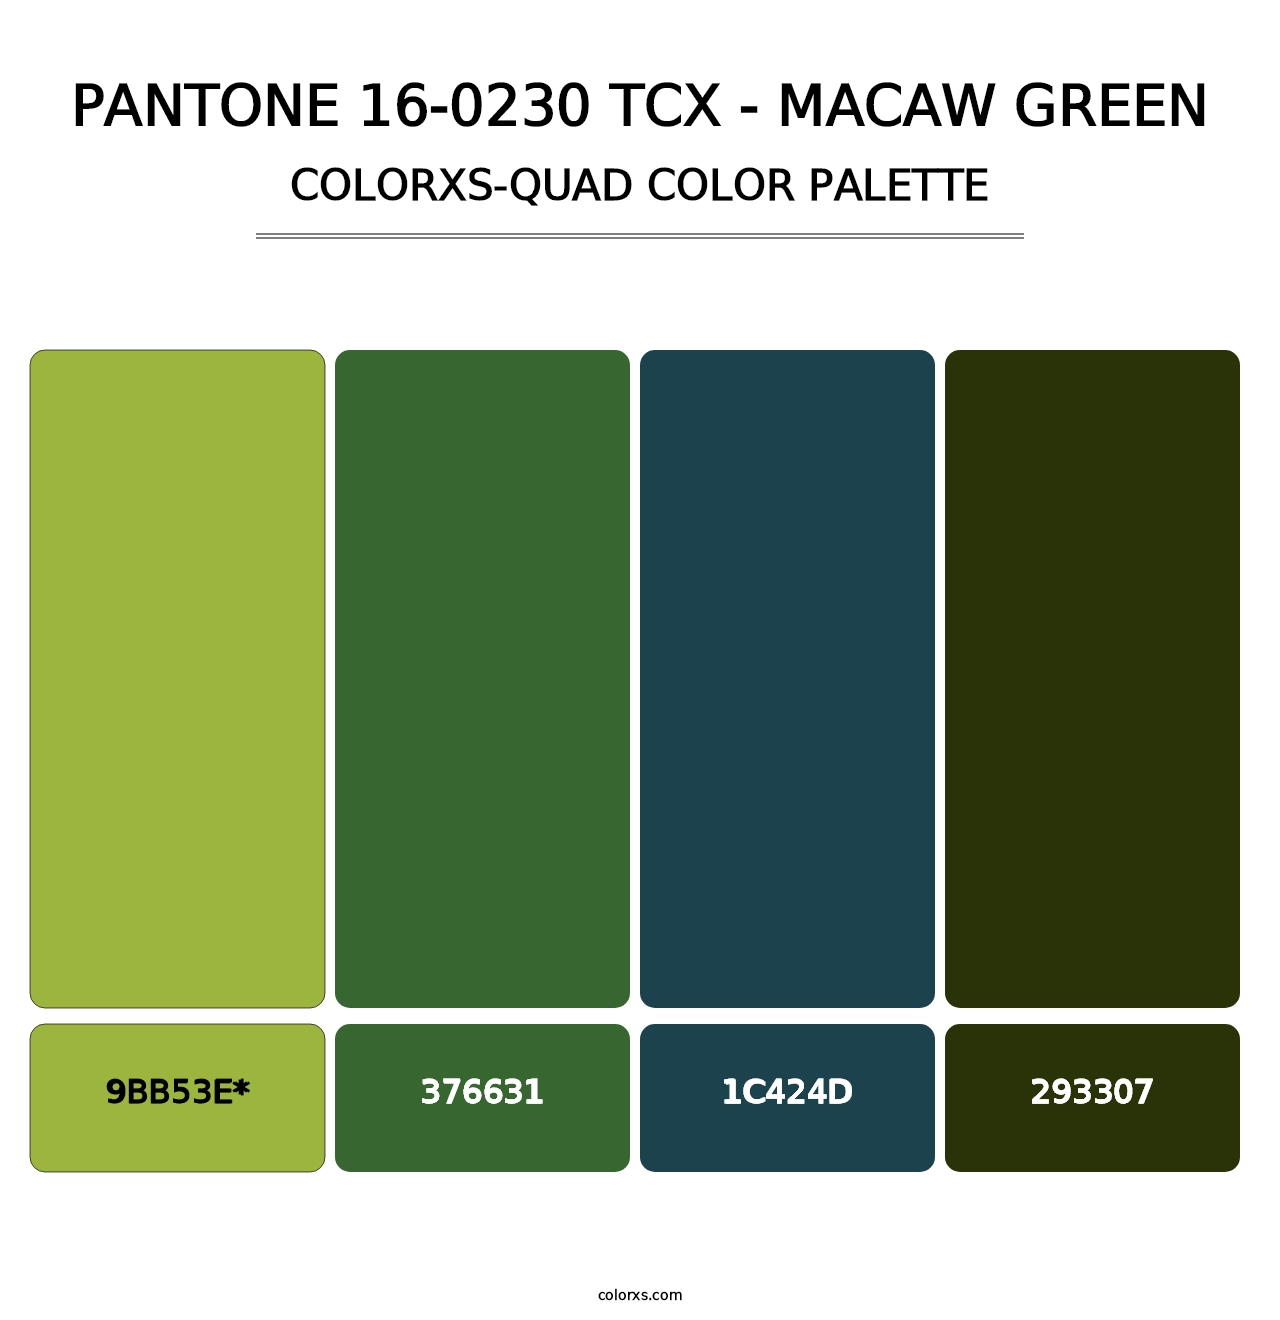 PANTONE 16-0230 TCX - Macaw Green - Colorxs Quad Palette